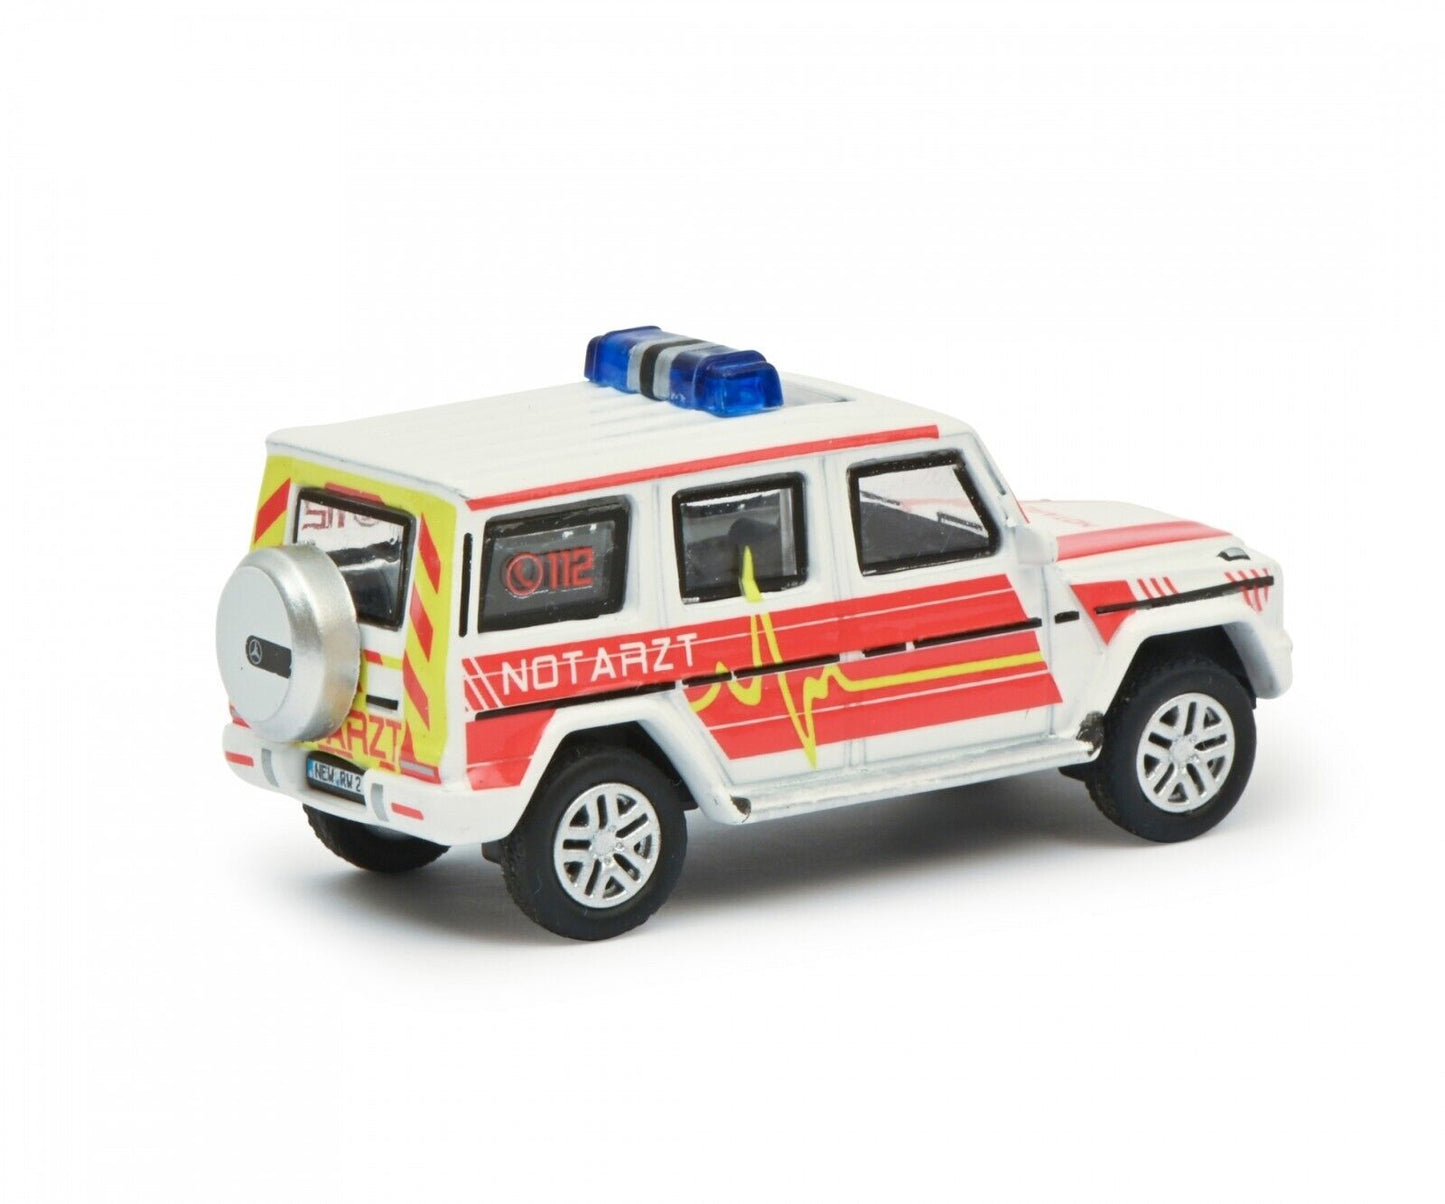 Schuco 1:87 Mercedes-Benz G Model Emergency Doctor 452674200